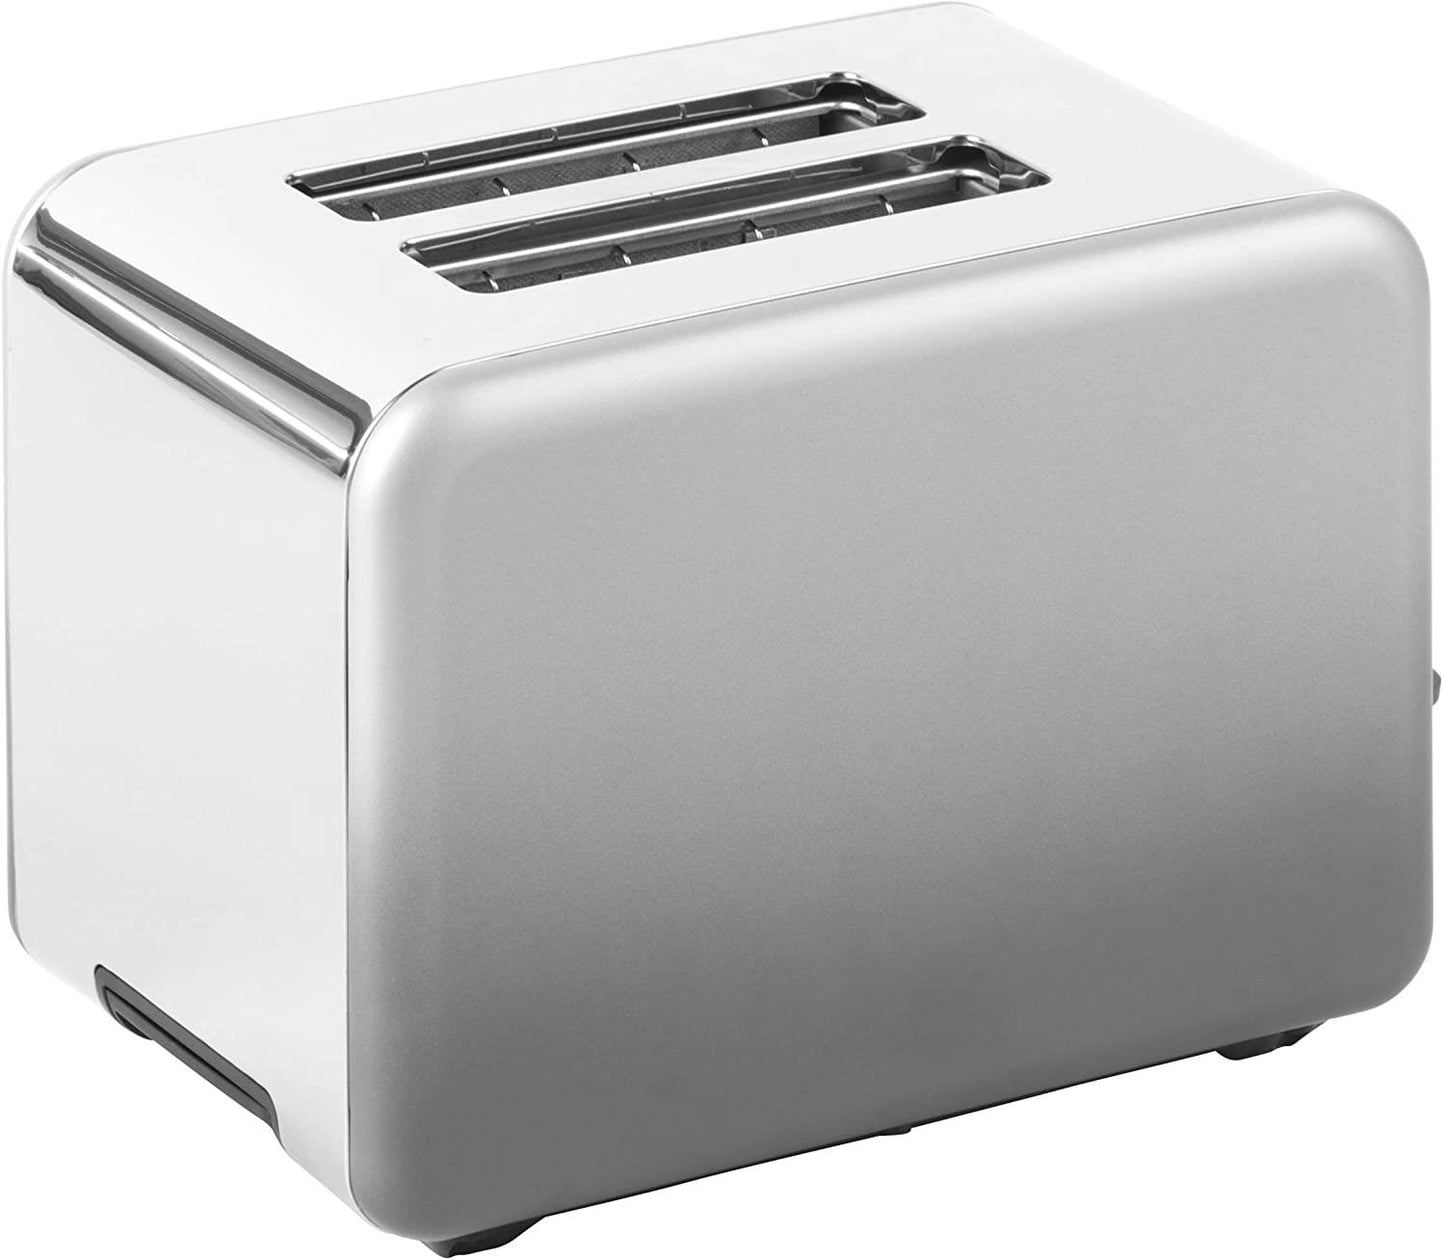 Progress Ombre Mist 2-Slice Toaster- Grey